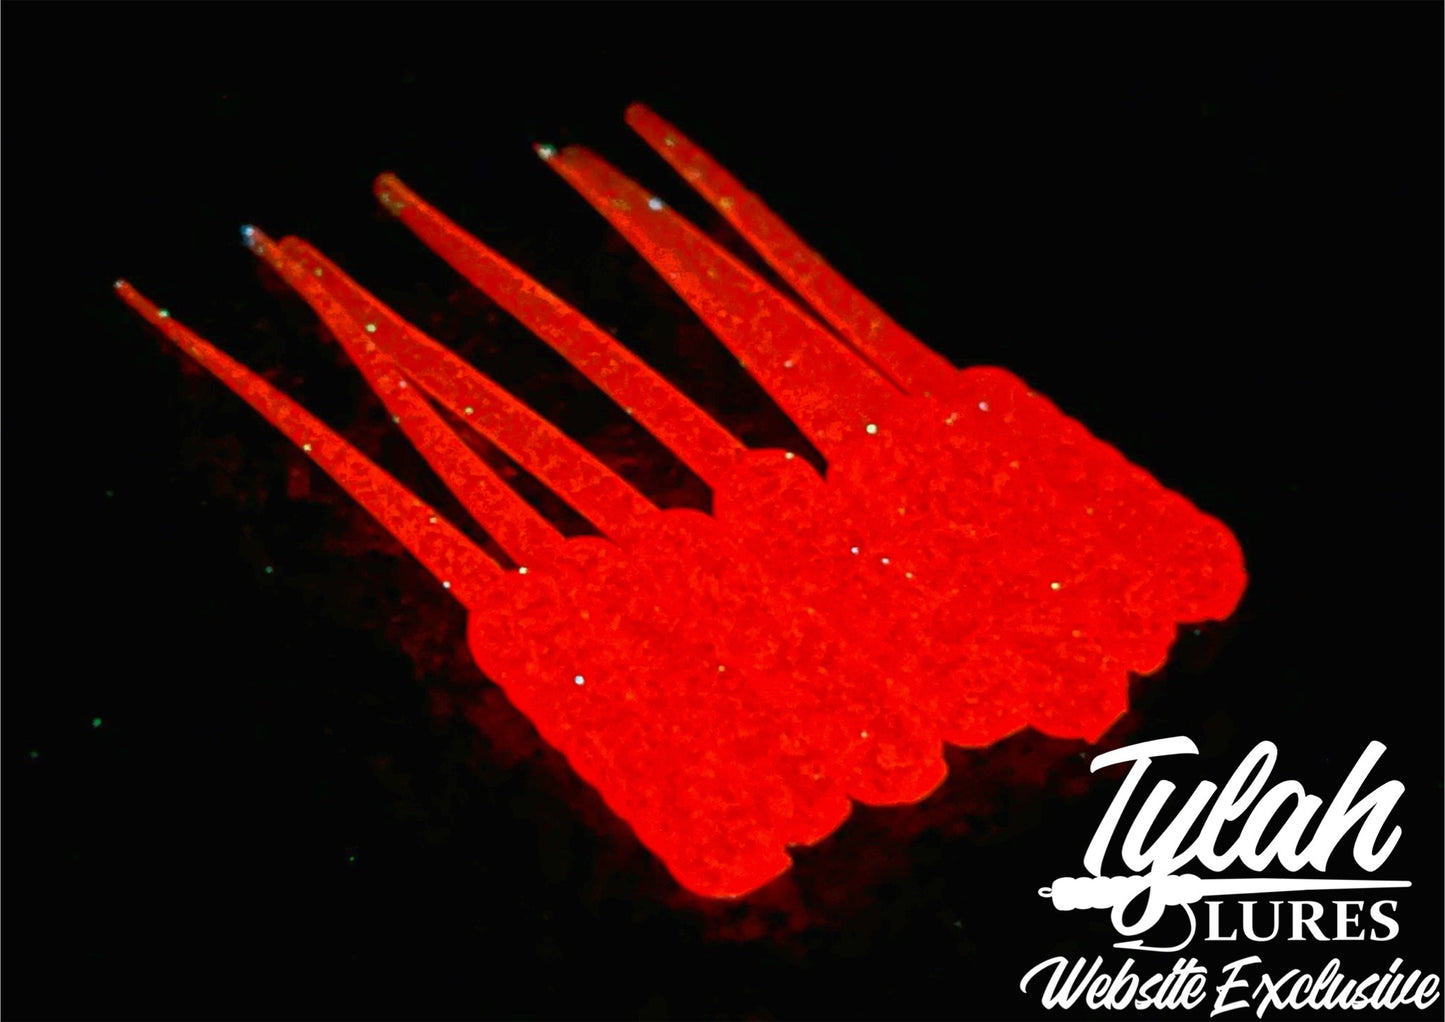 TylahLures Website Exclusive Red Glow 1.5in.